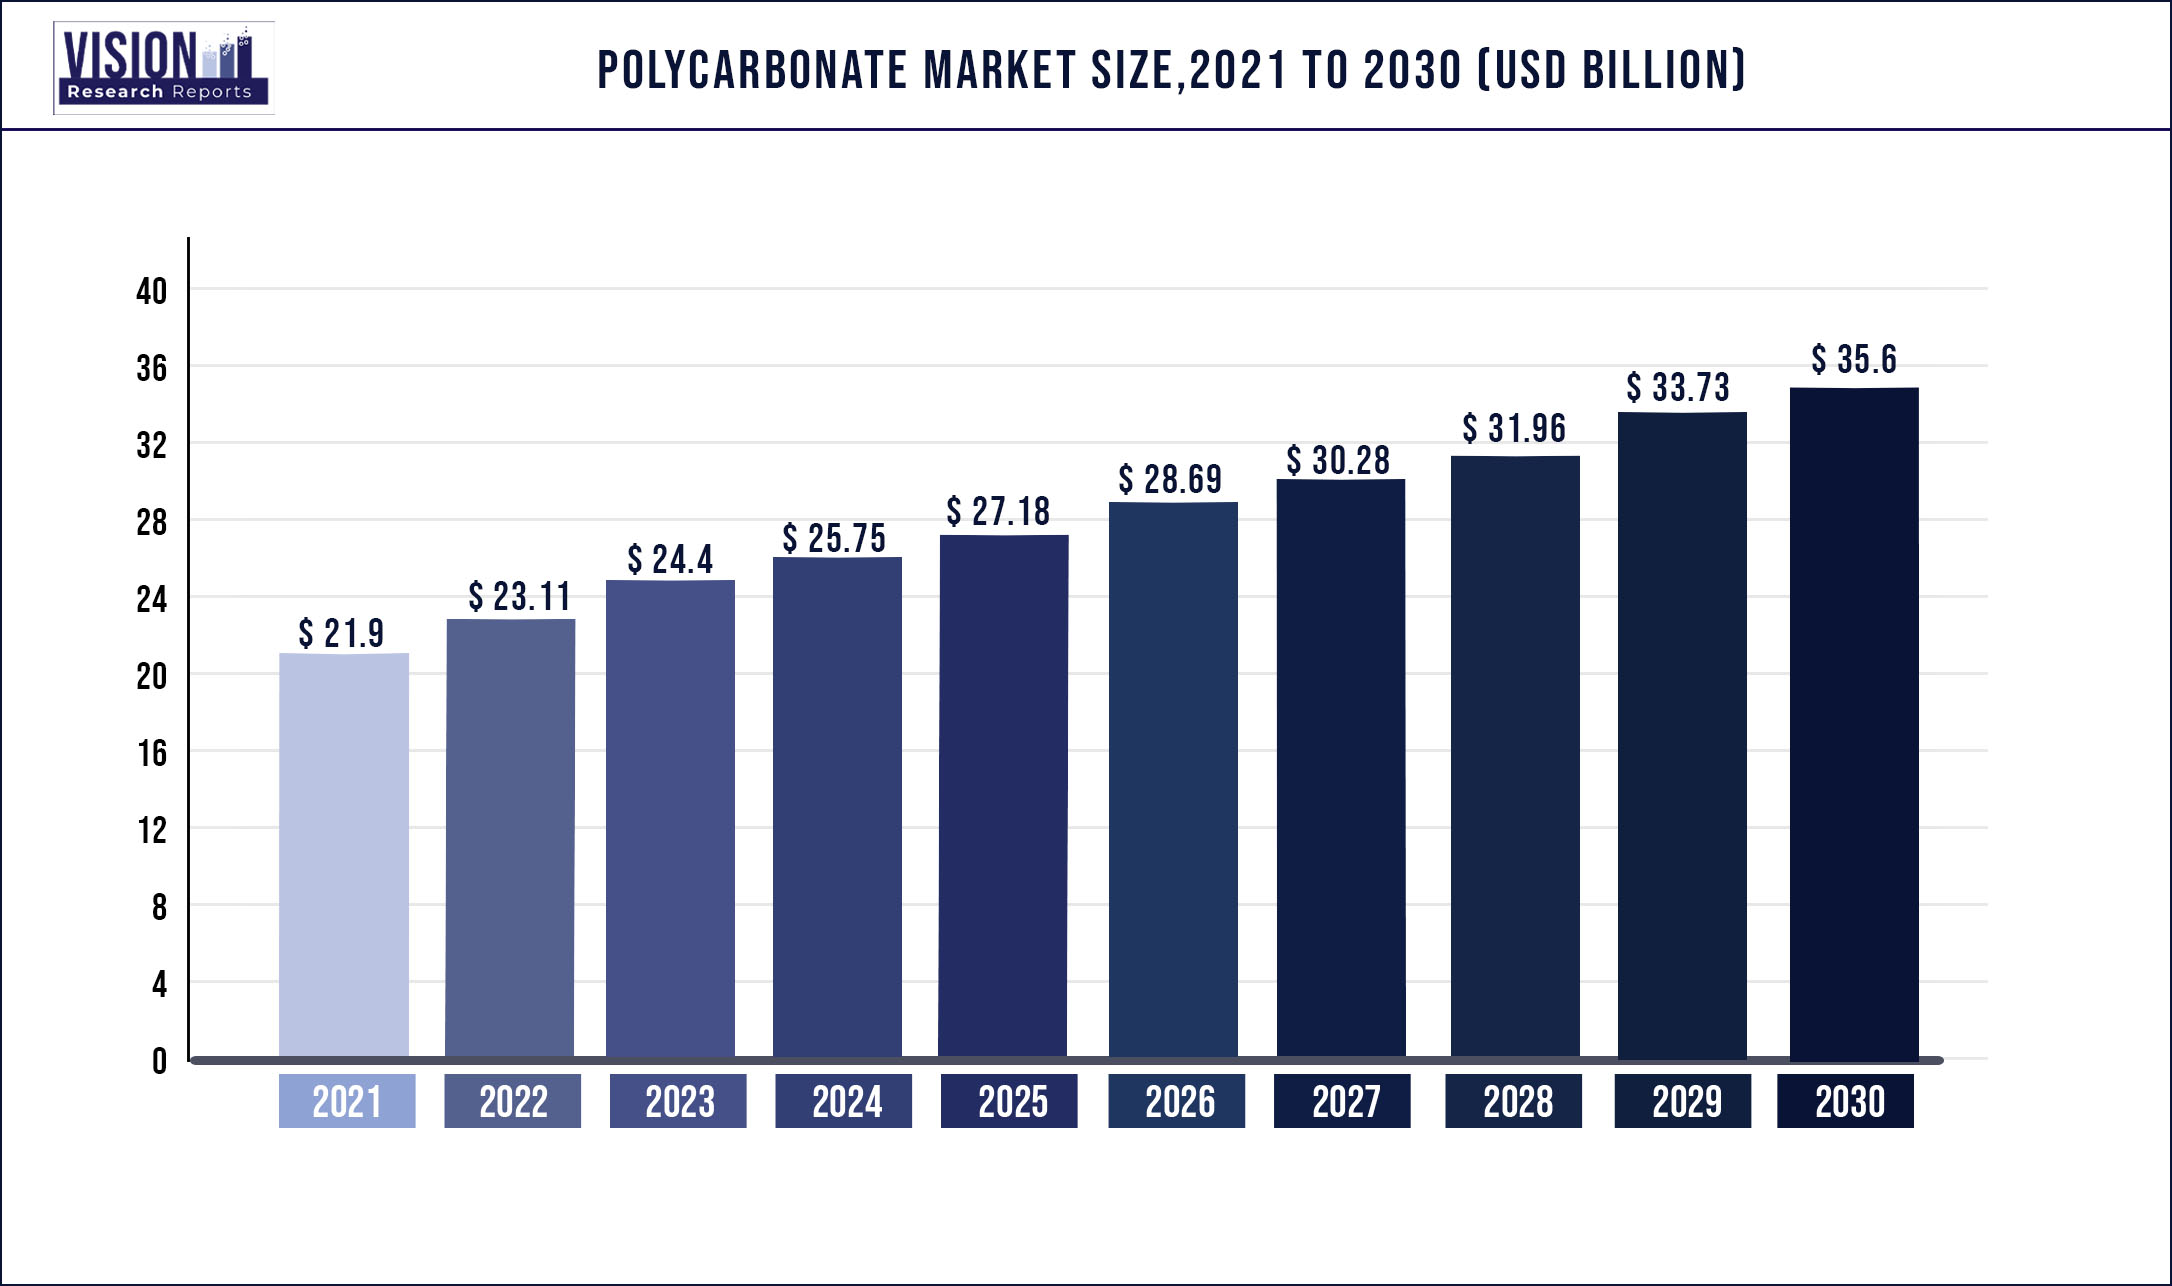 Polycarbonate Market Size 2021 to 2030